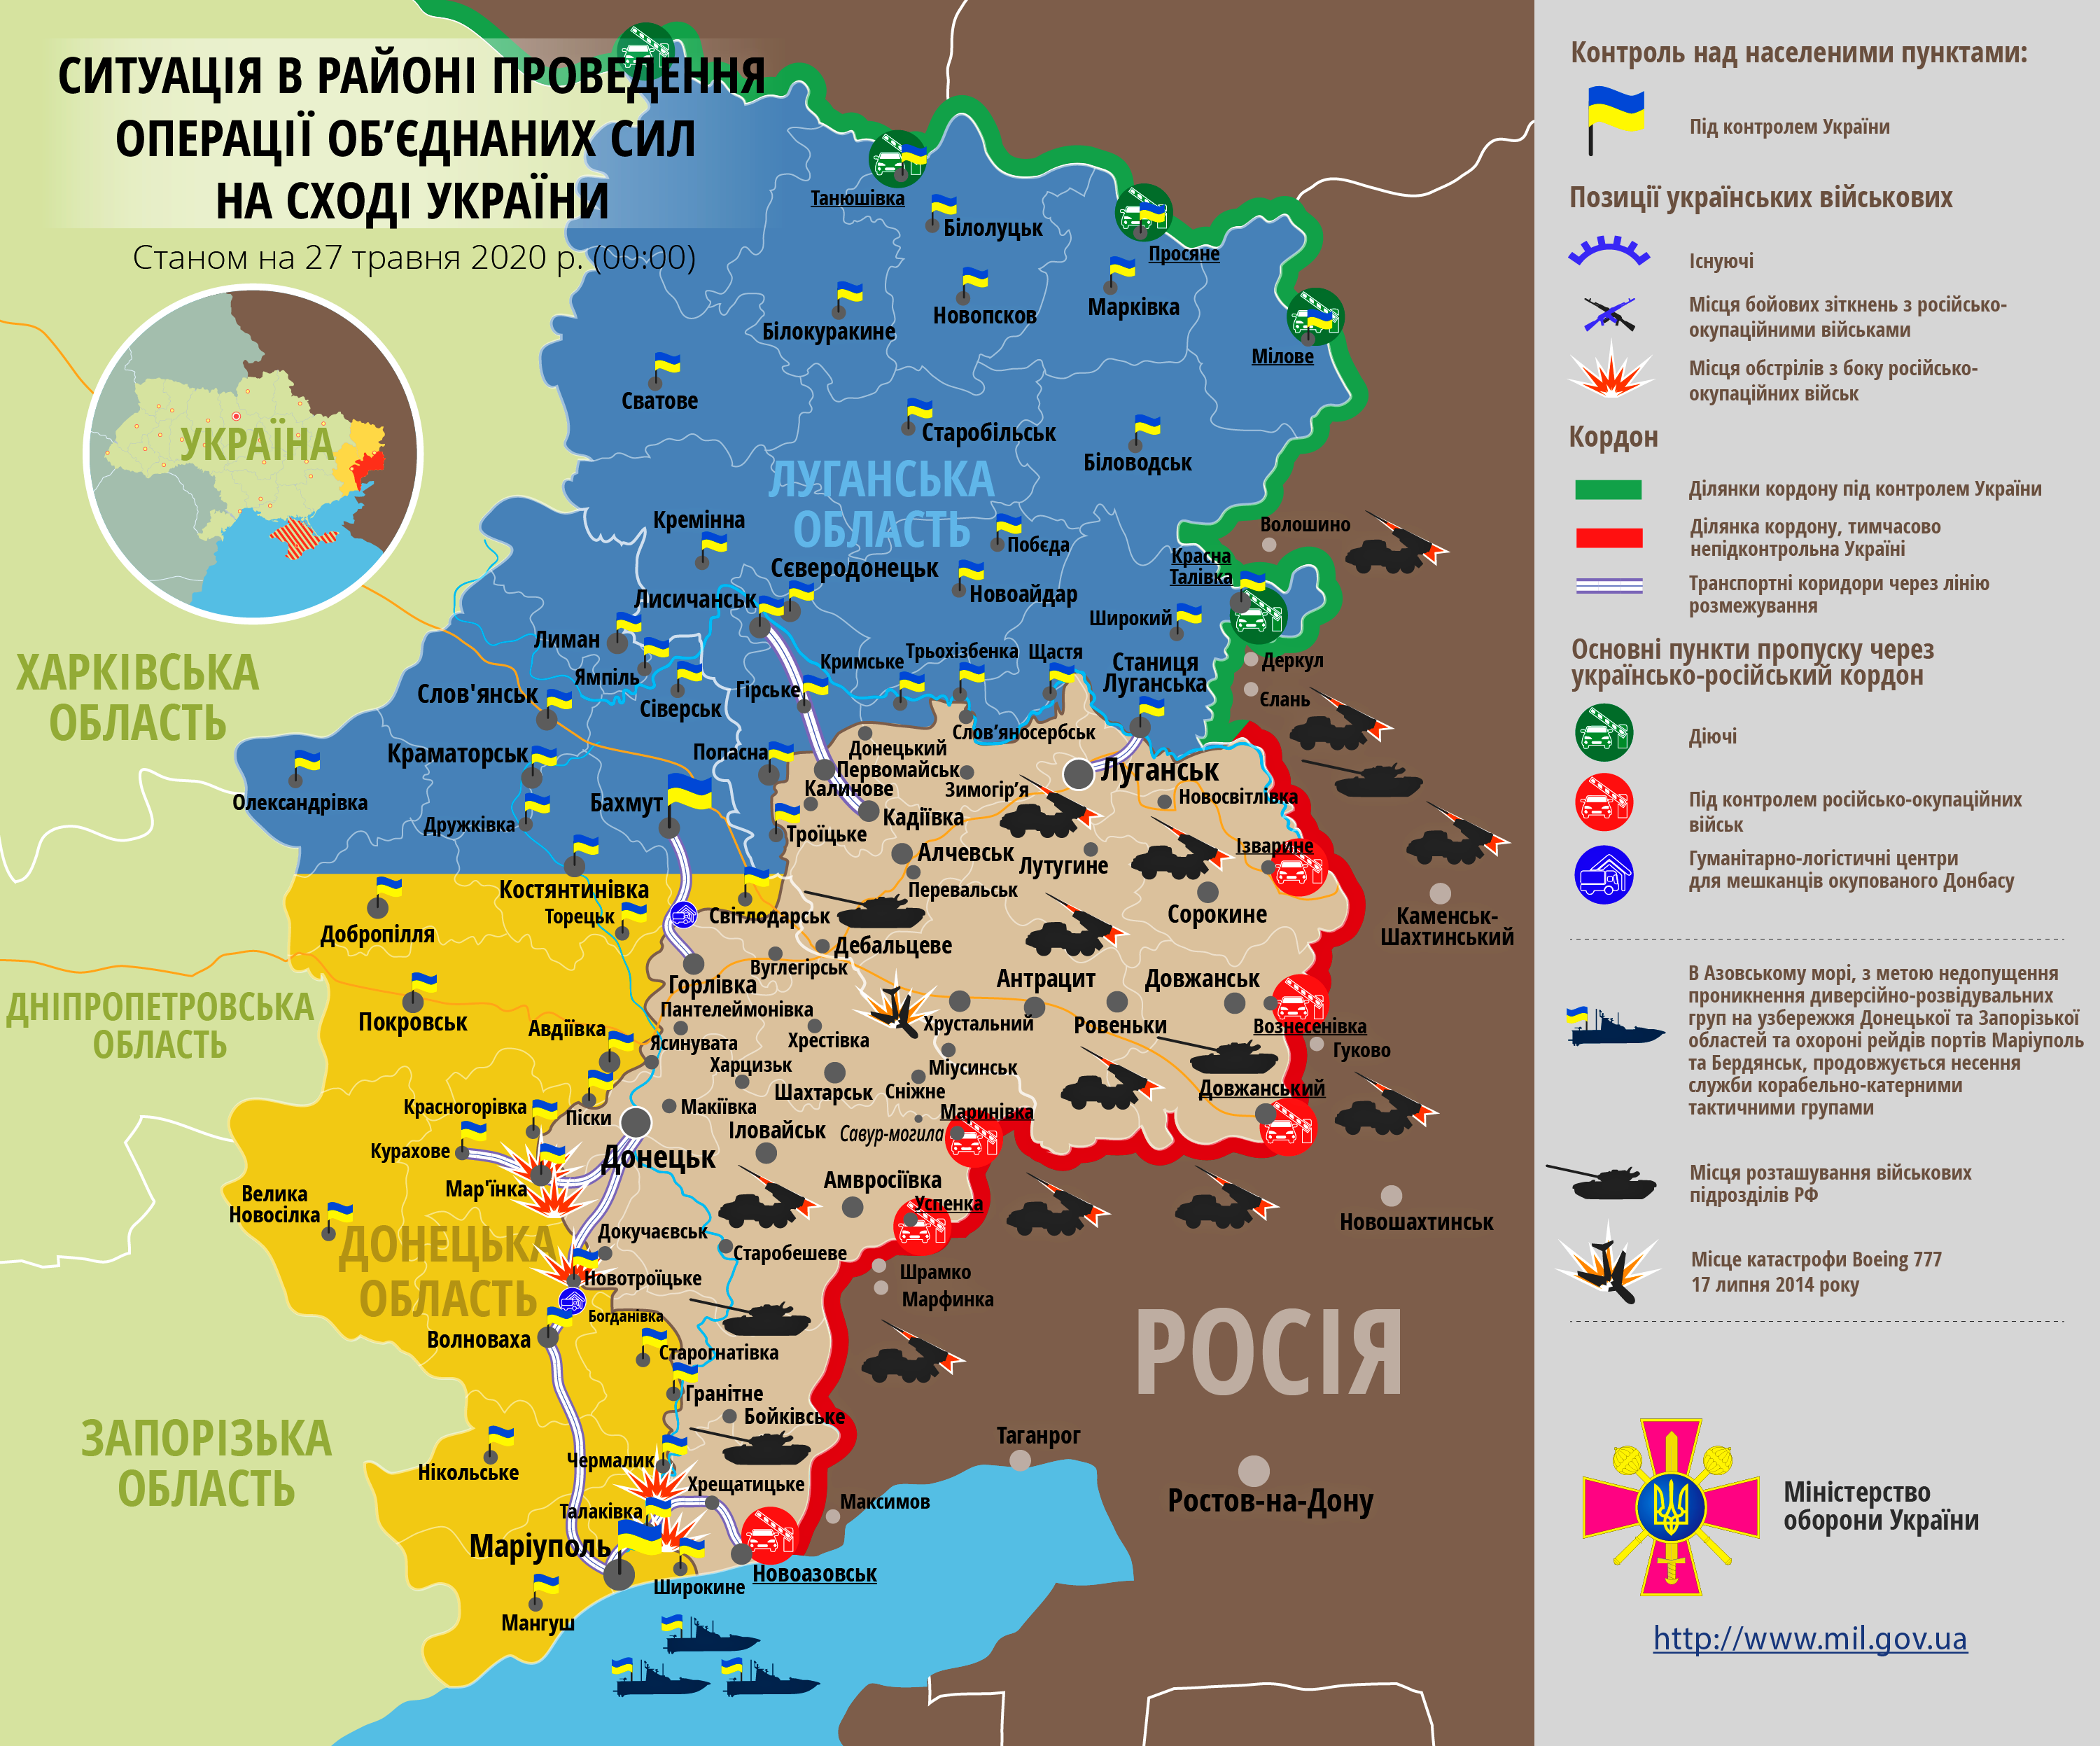 http://media.slovoidilo.ua/media/infographics/12/111688/karta-ato-rnbo-2020-05-27-uk_origin.png